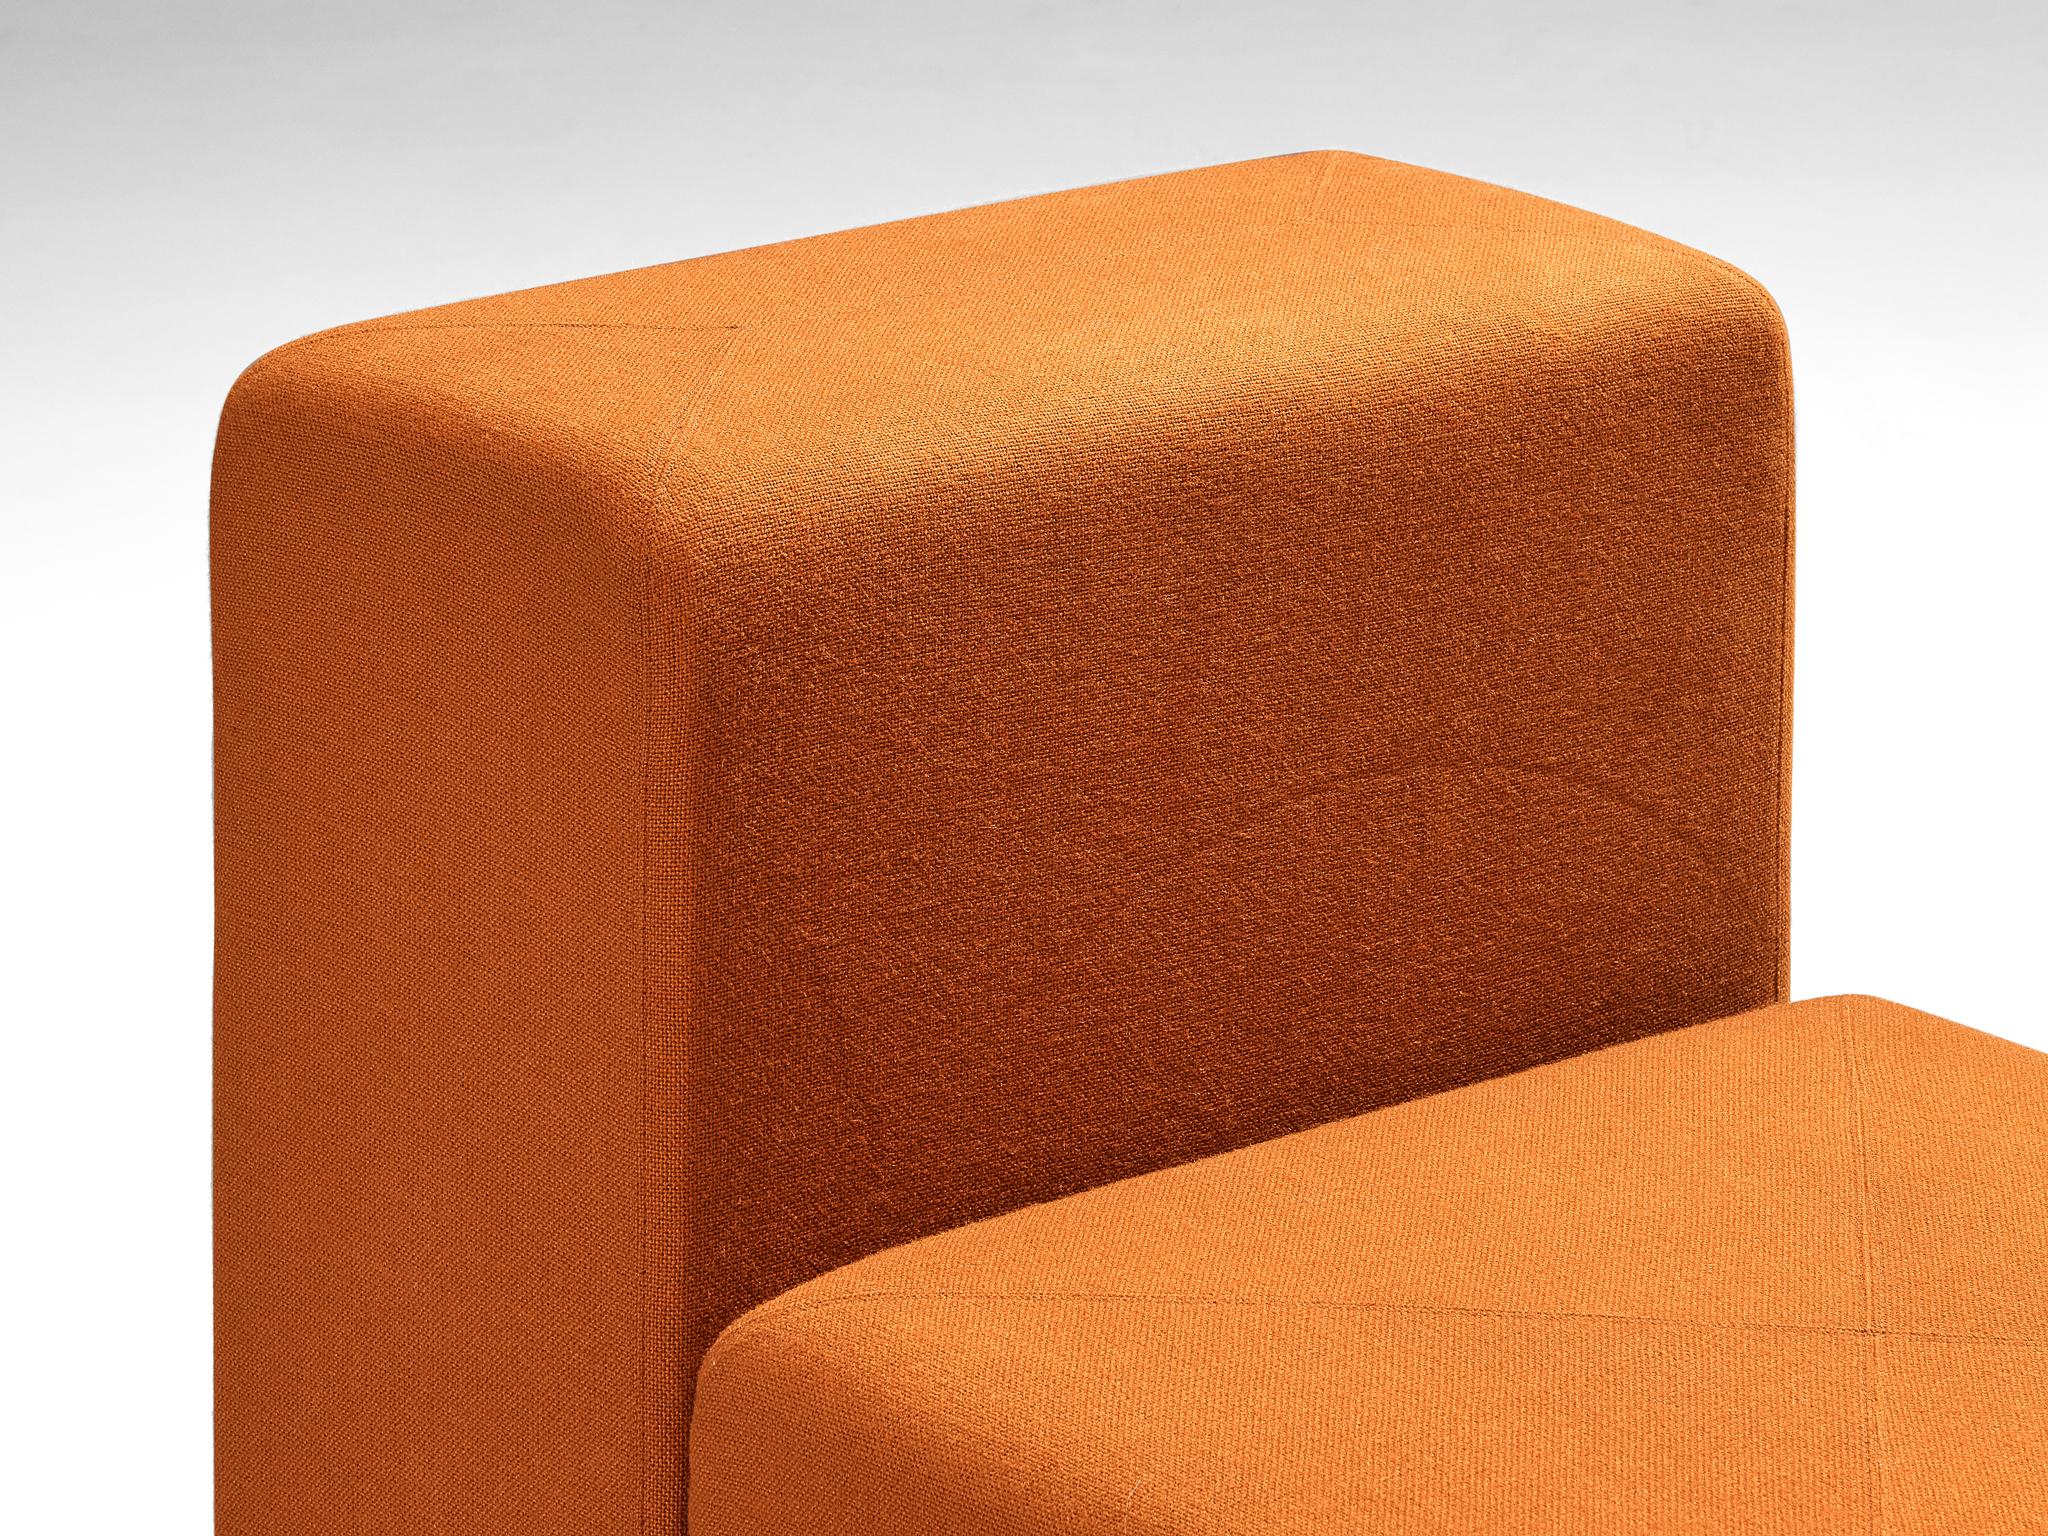 Giancarlo Piretti for Anonima Castelli 'Sistema 61' Pair of Lounge Chairs  For Sale 1